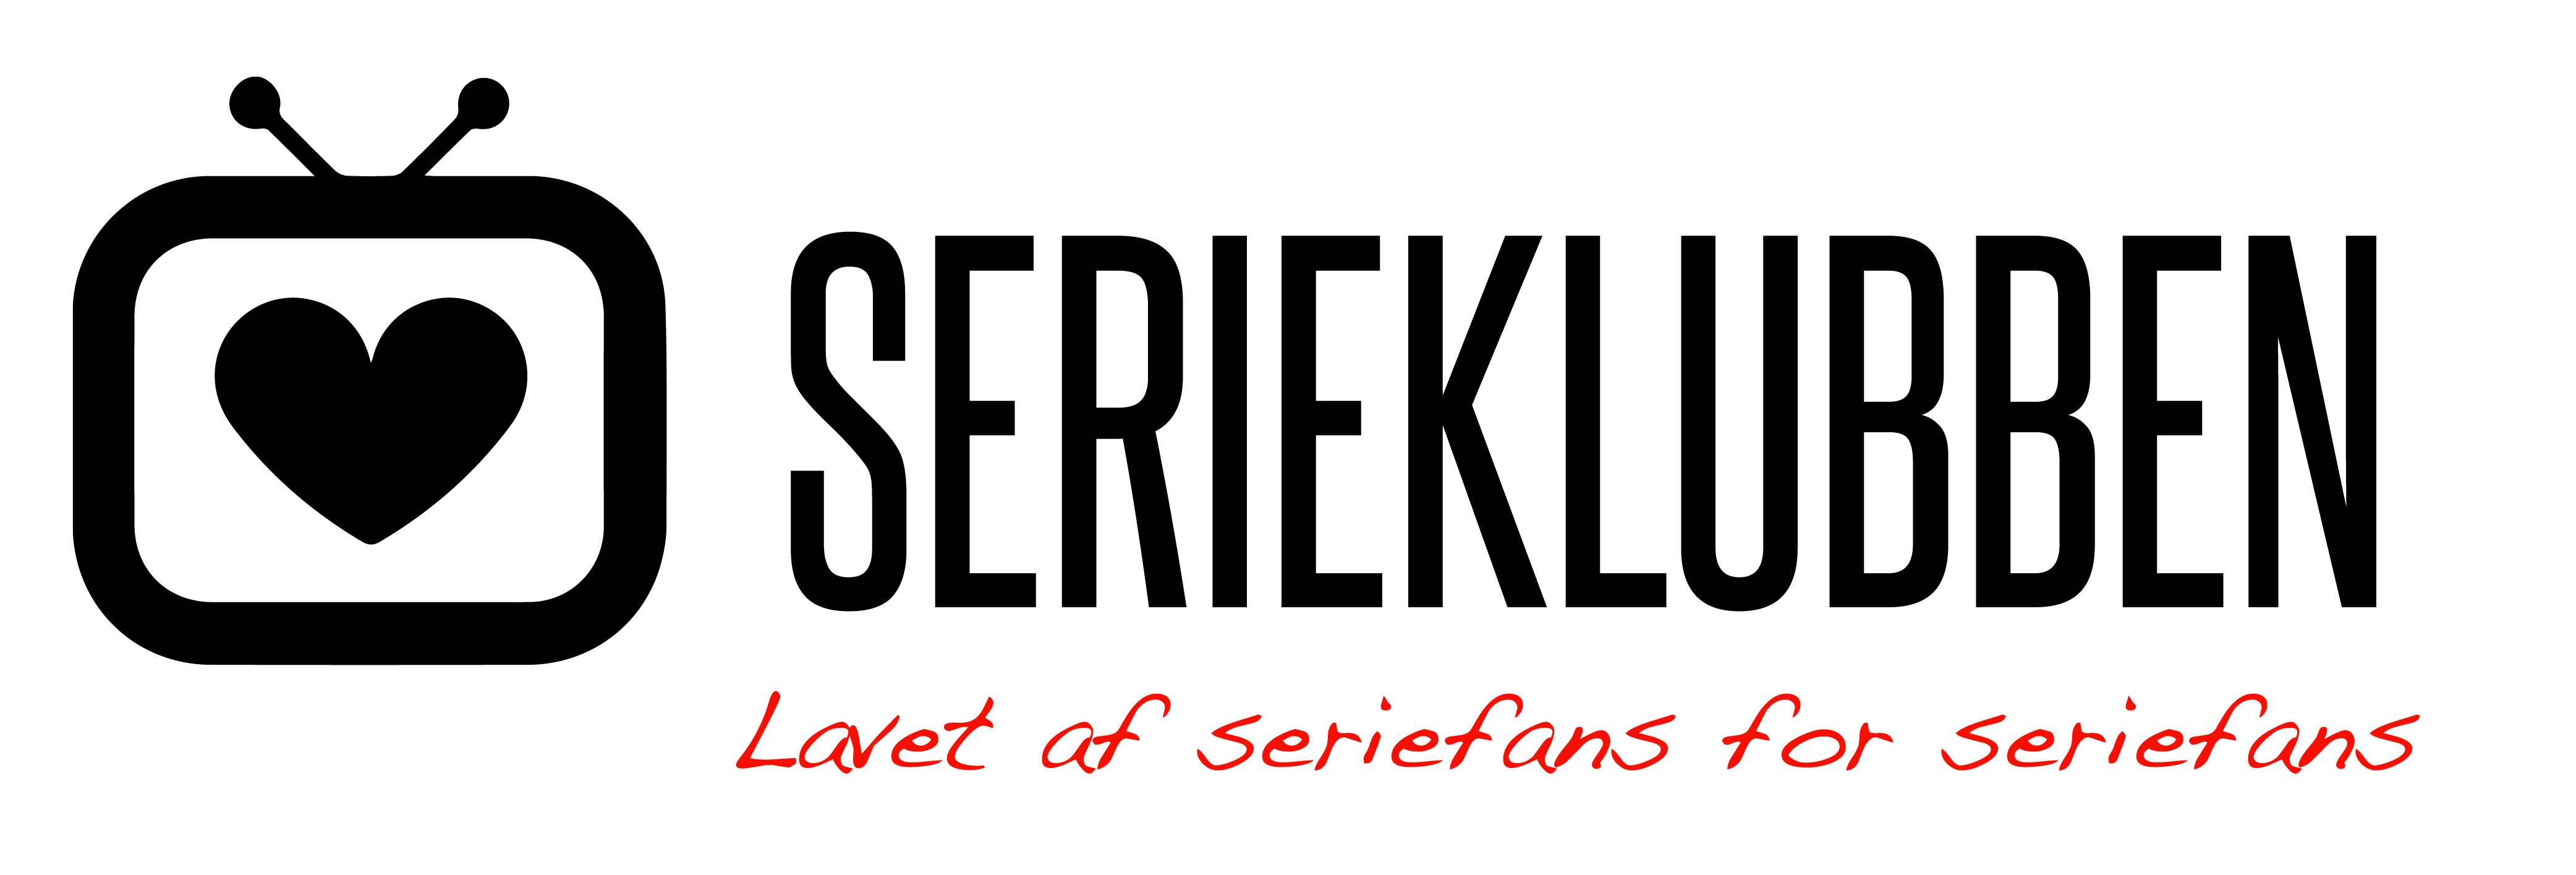 https://imgix.vielskerserier.dk/2020/02/Serieklub_logo_sort-afseriesfansforseriefans.png